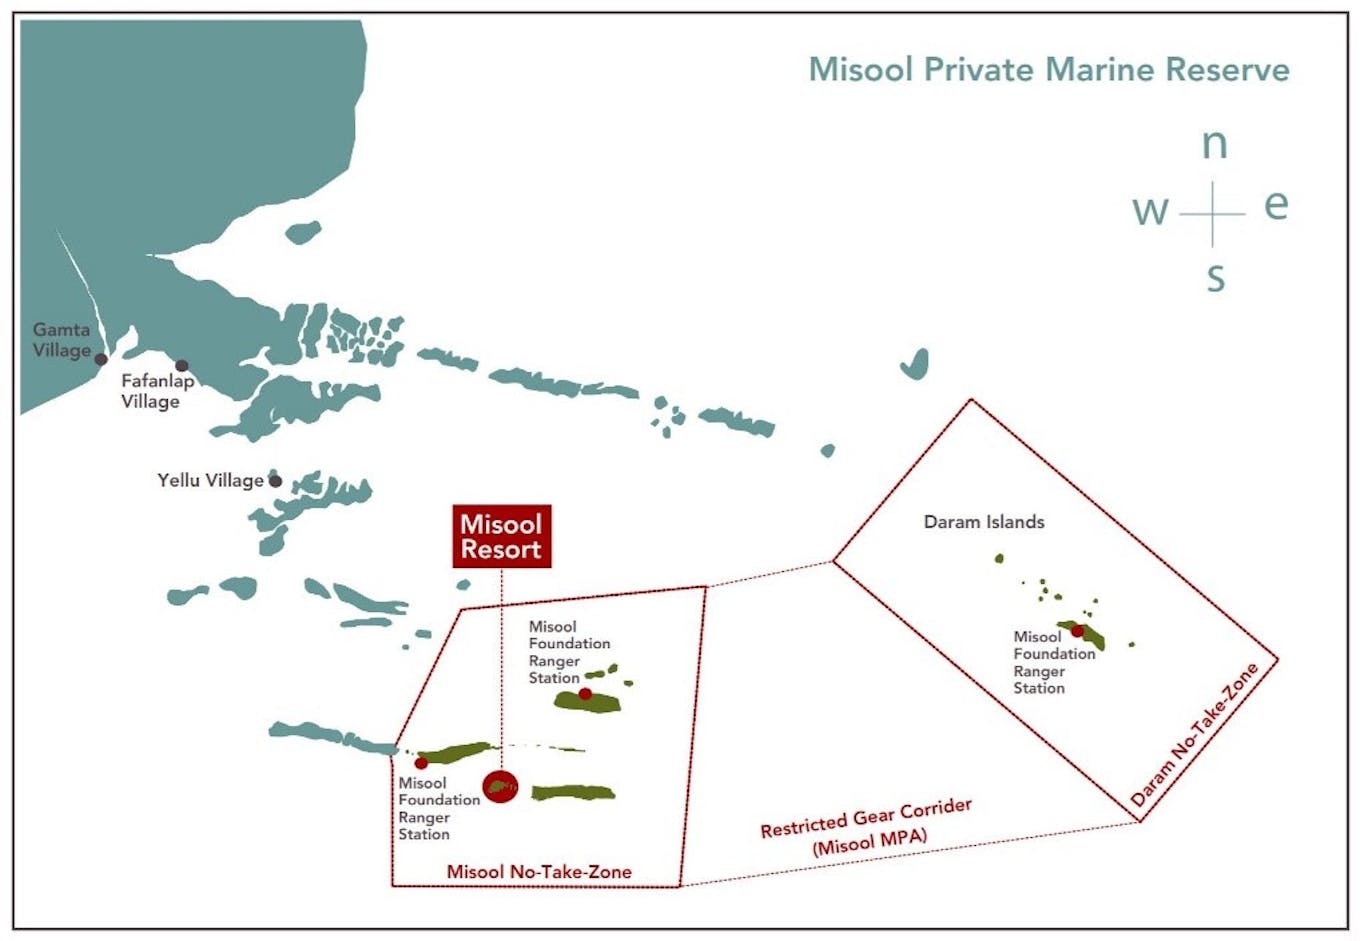 Misool Private Marine Reserve